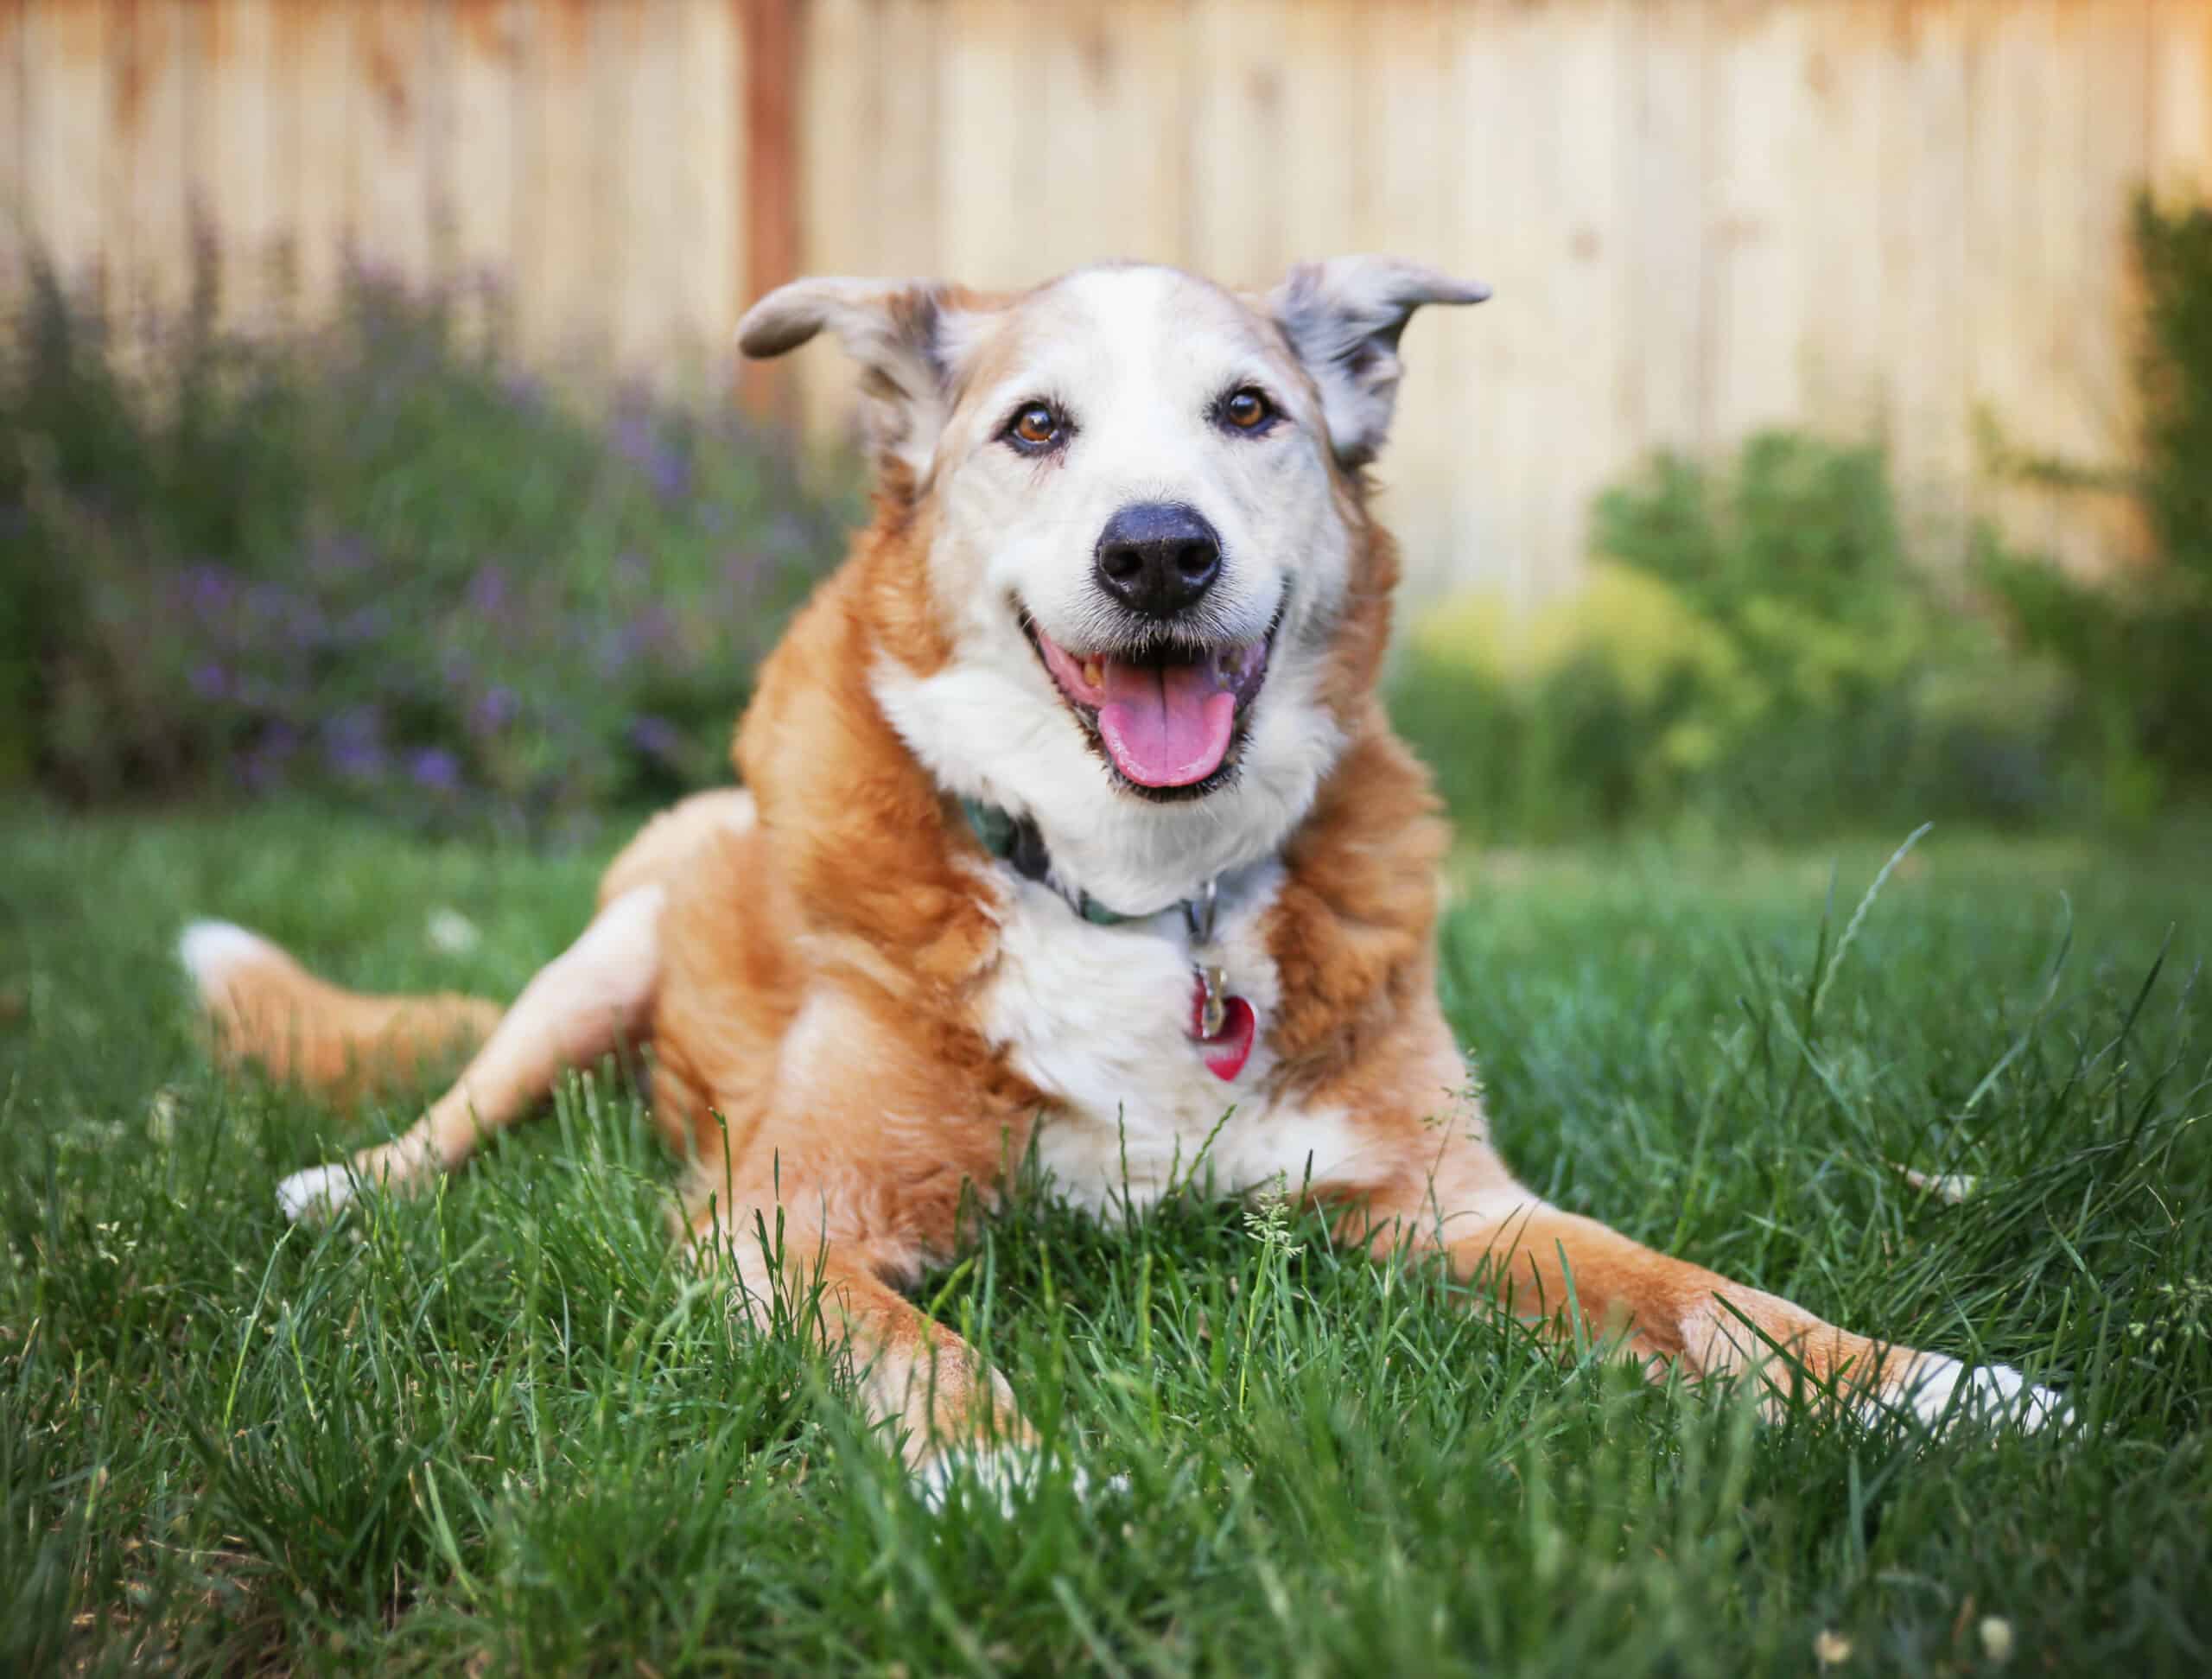 Tips for safely exercising your senior dog